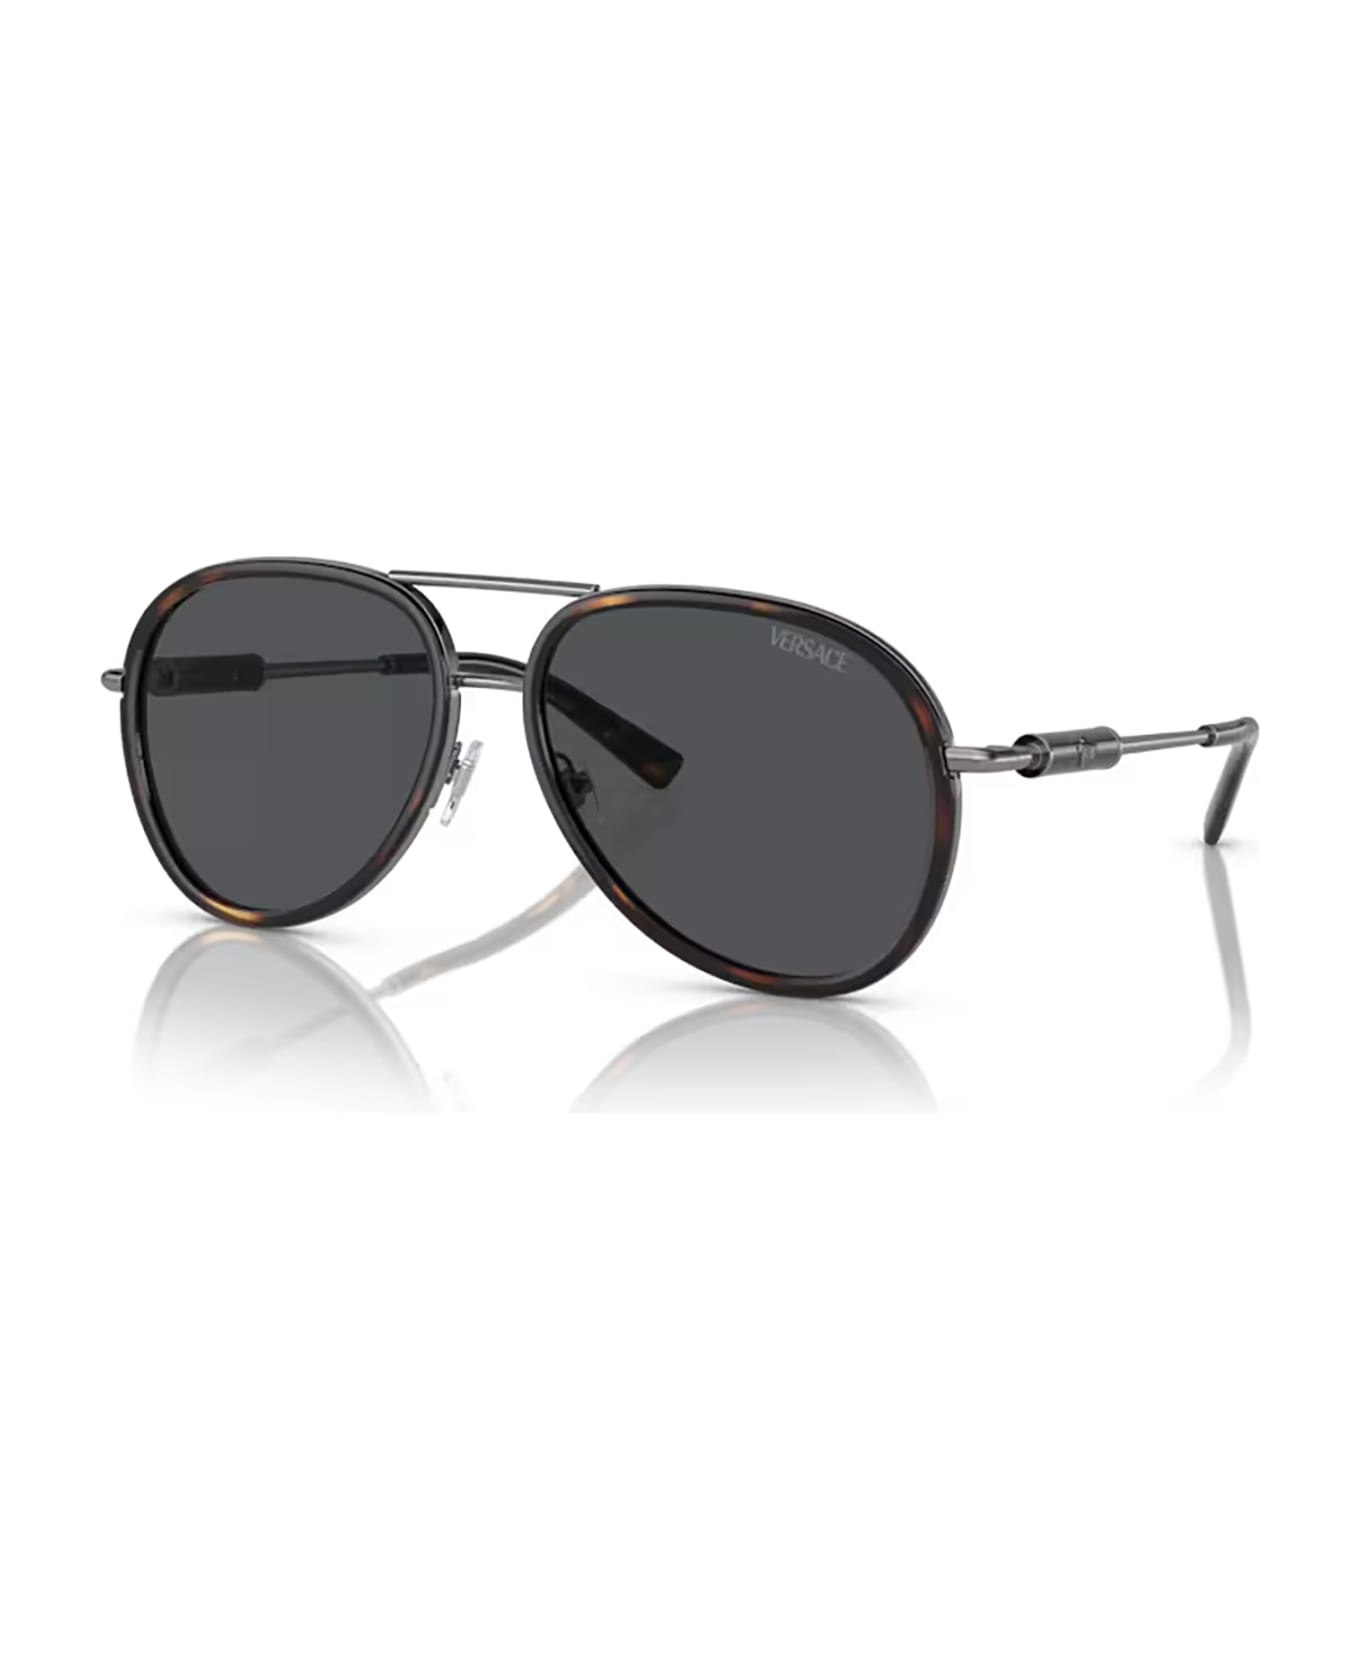 Versace Eyewear Ve2260 Havana Sunglasses - Havana サングラス